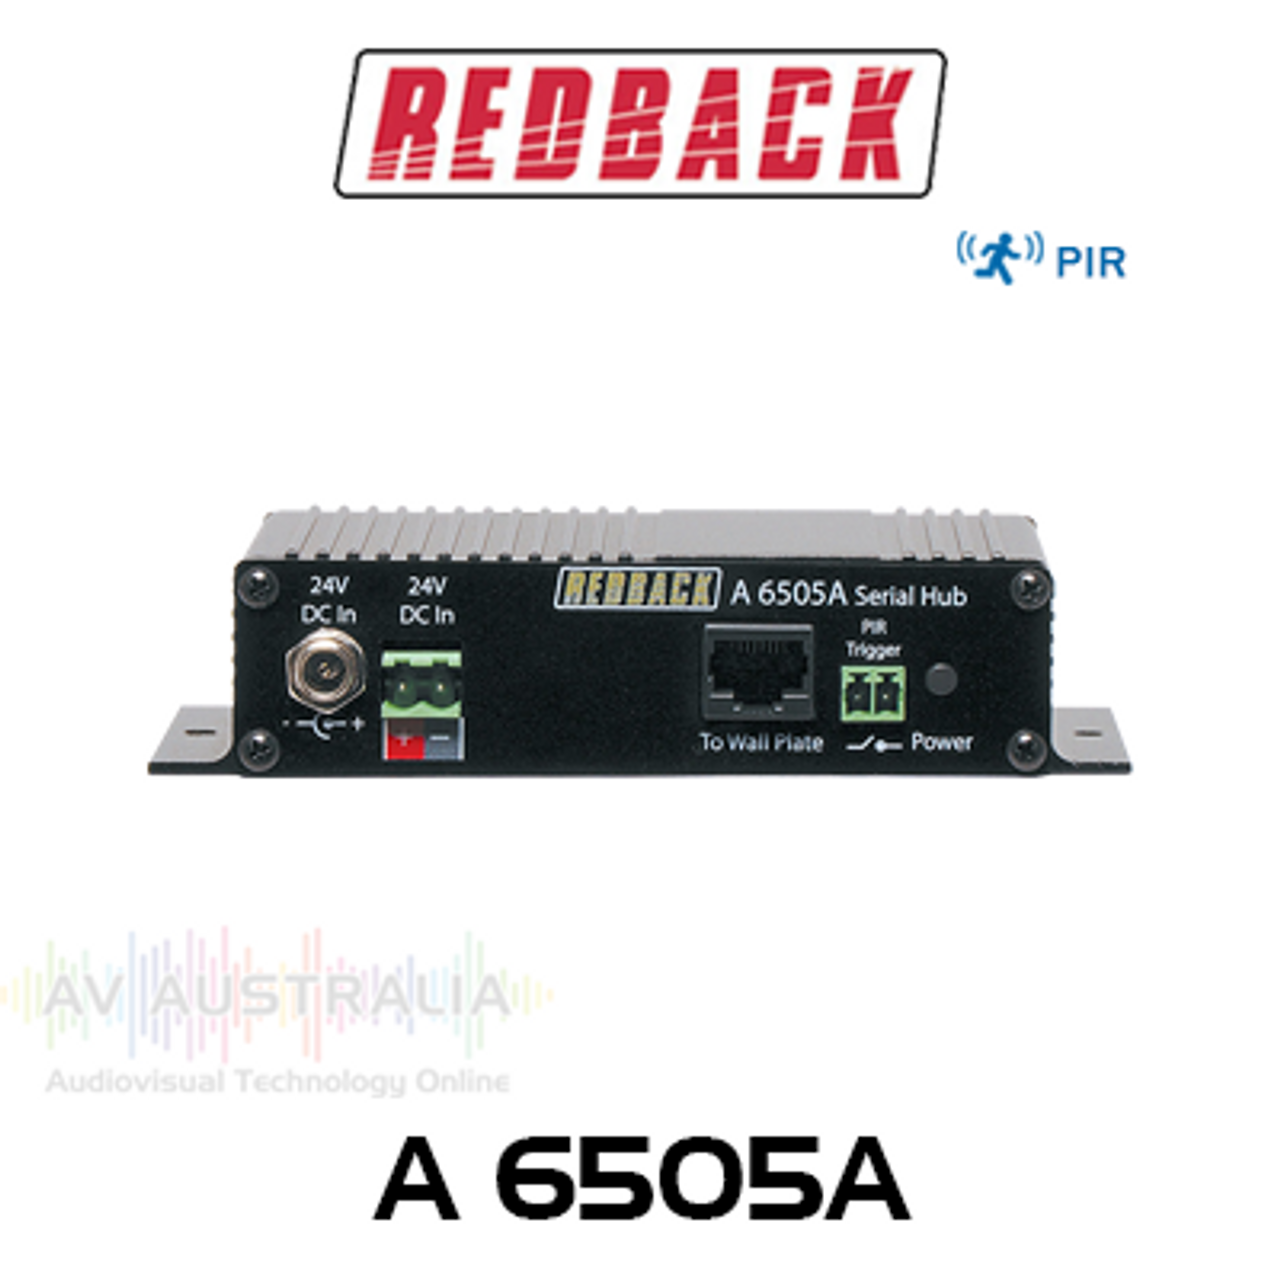 Redback 3 Relay, 2 Serial Control Hub With PIR Trigger